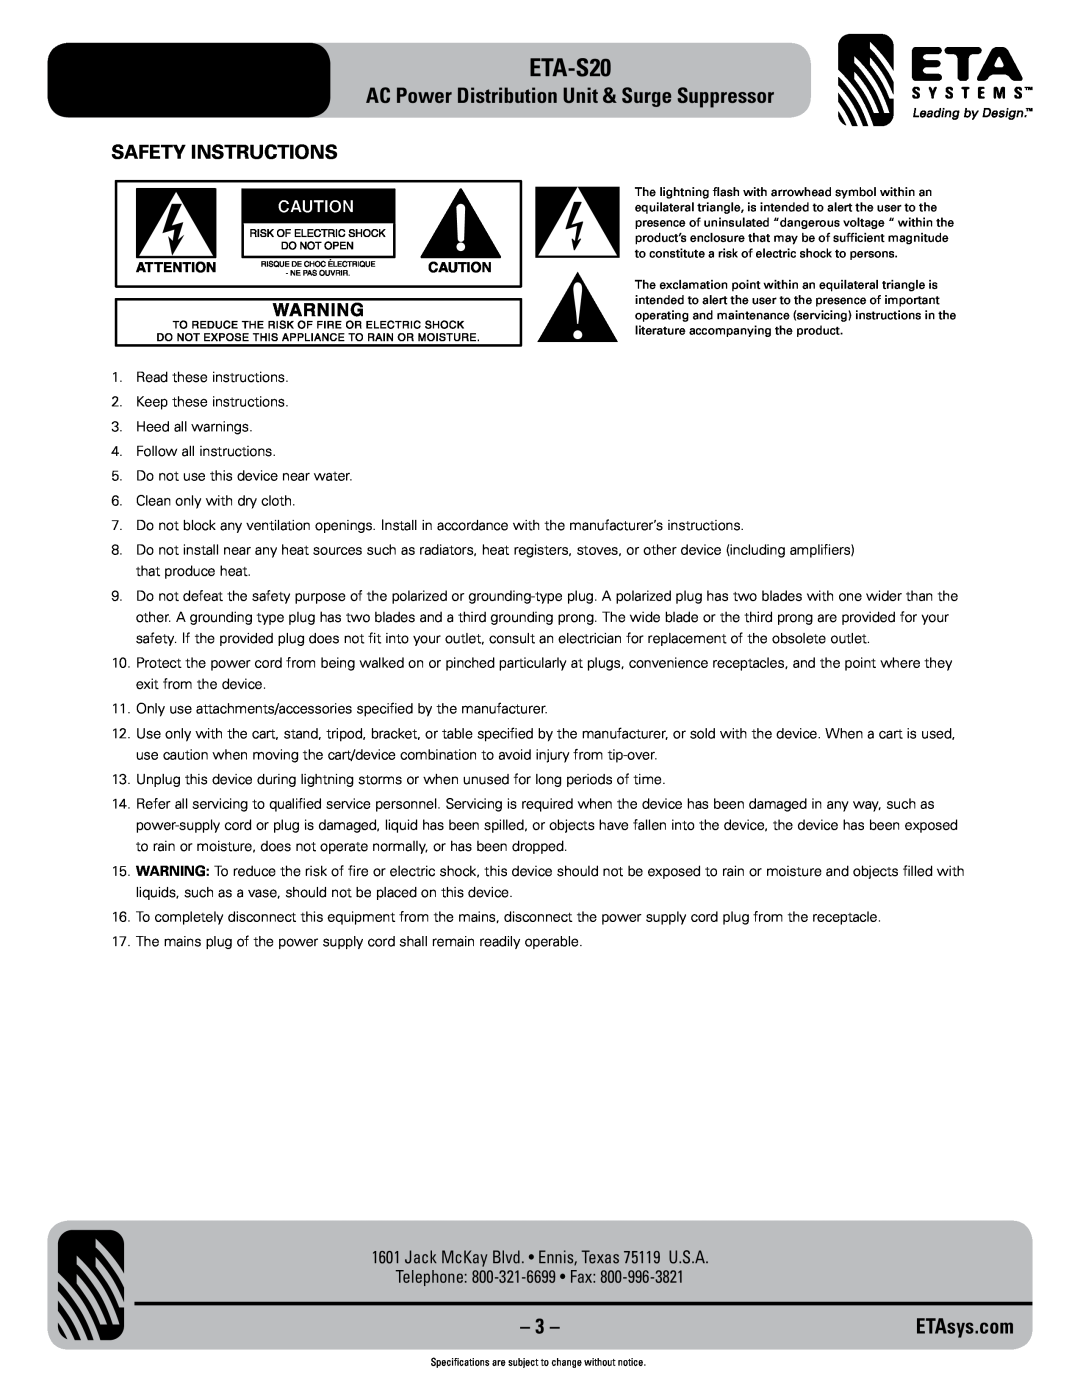 ETA Systems ETA-S20 Safety Instructions, AC Power Distribution Unit & Surge Suppressor, Telephone 800-321-6699 Fax 